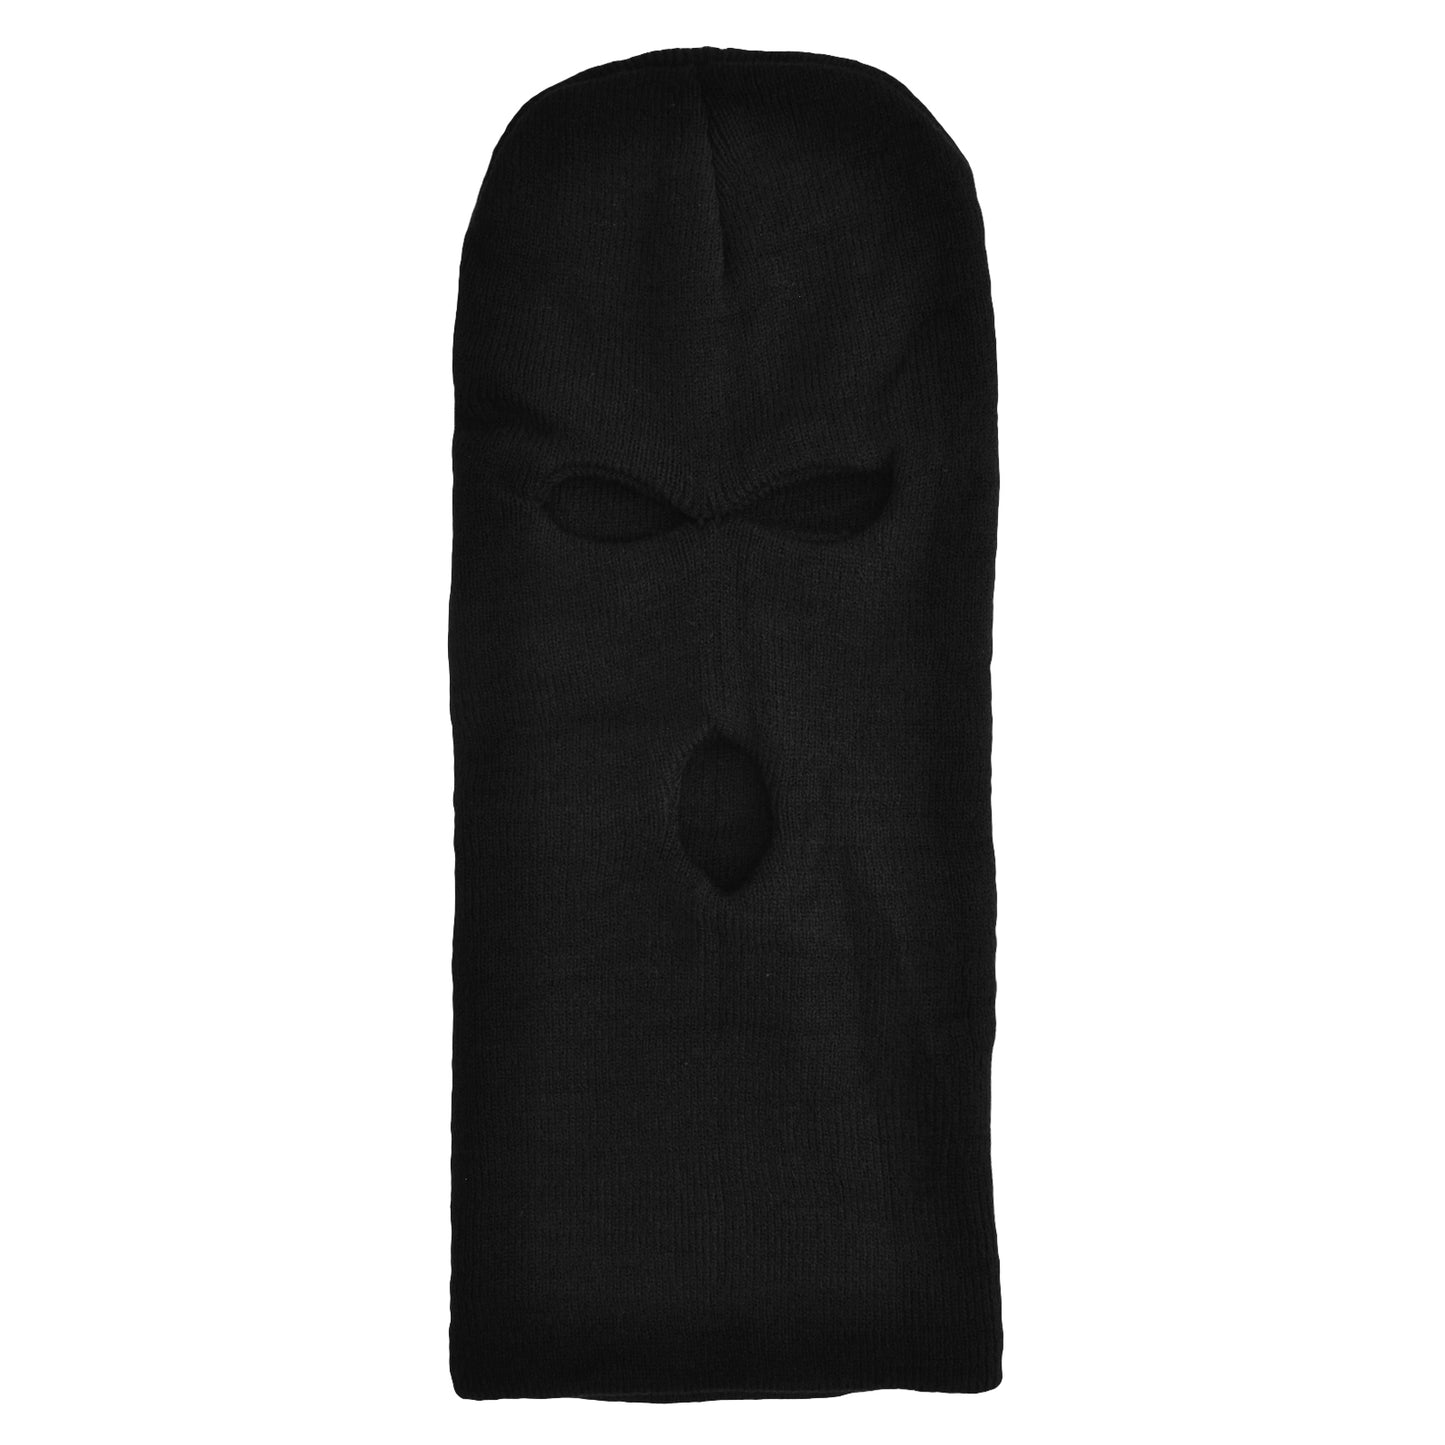 Angelina Winter Warmth Black Knitted Balaclava 3 Hole Ski Mask (12-Pack), #WH2040